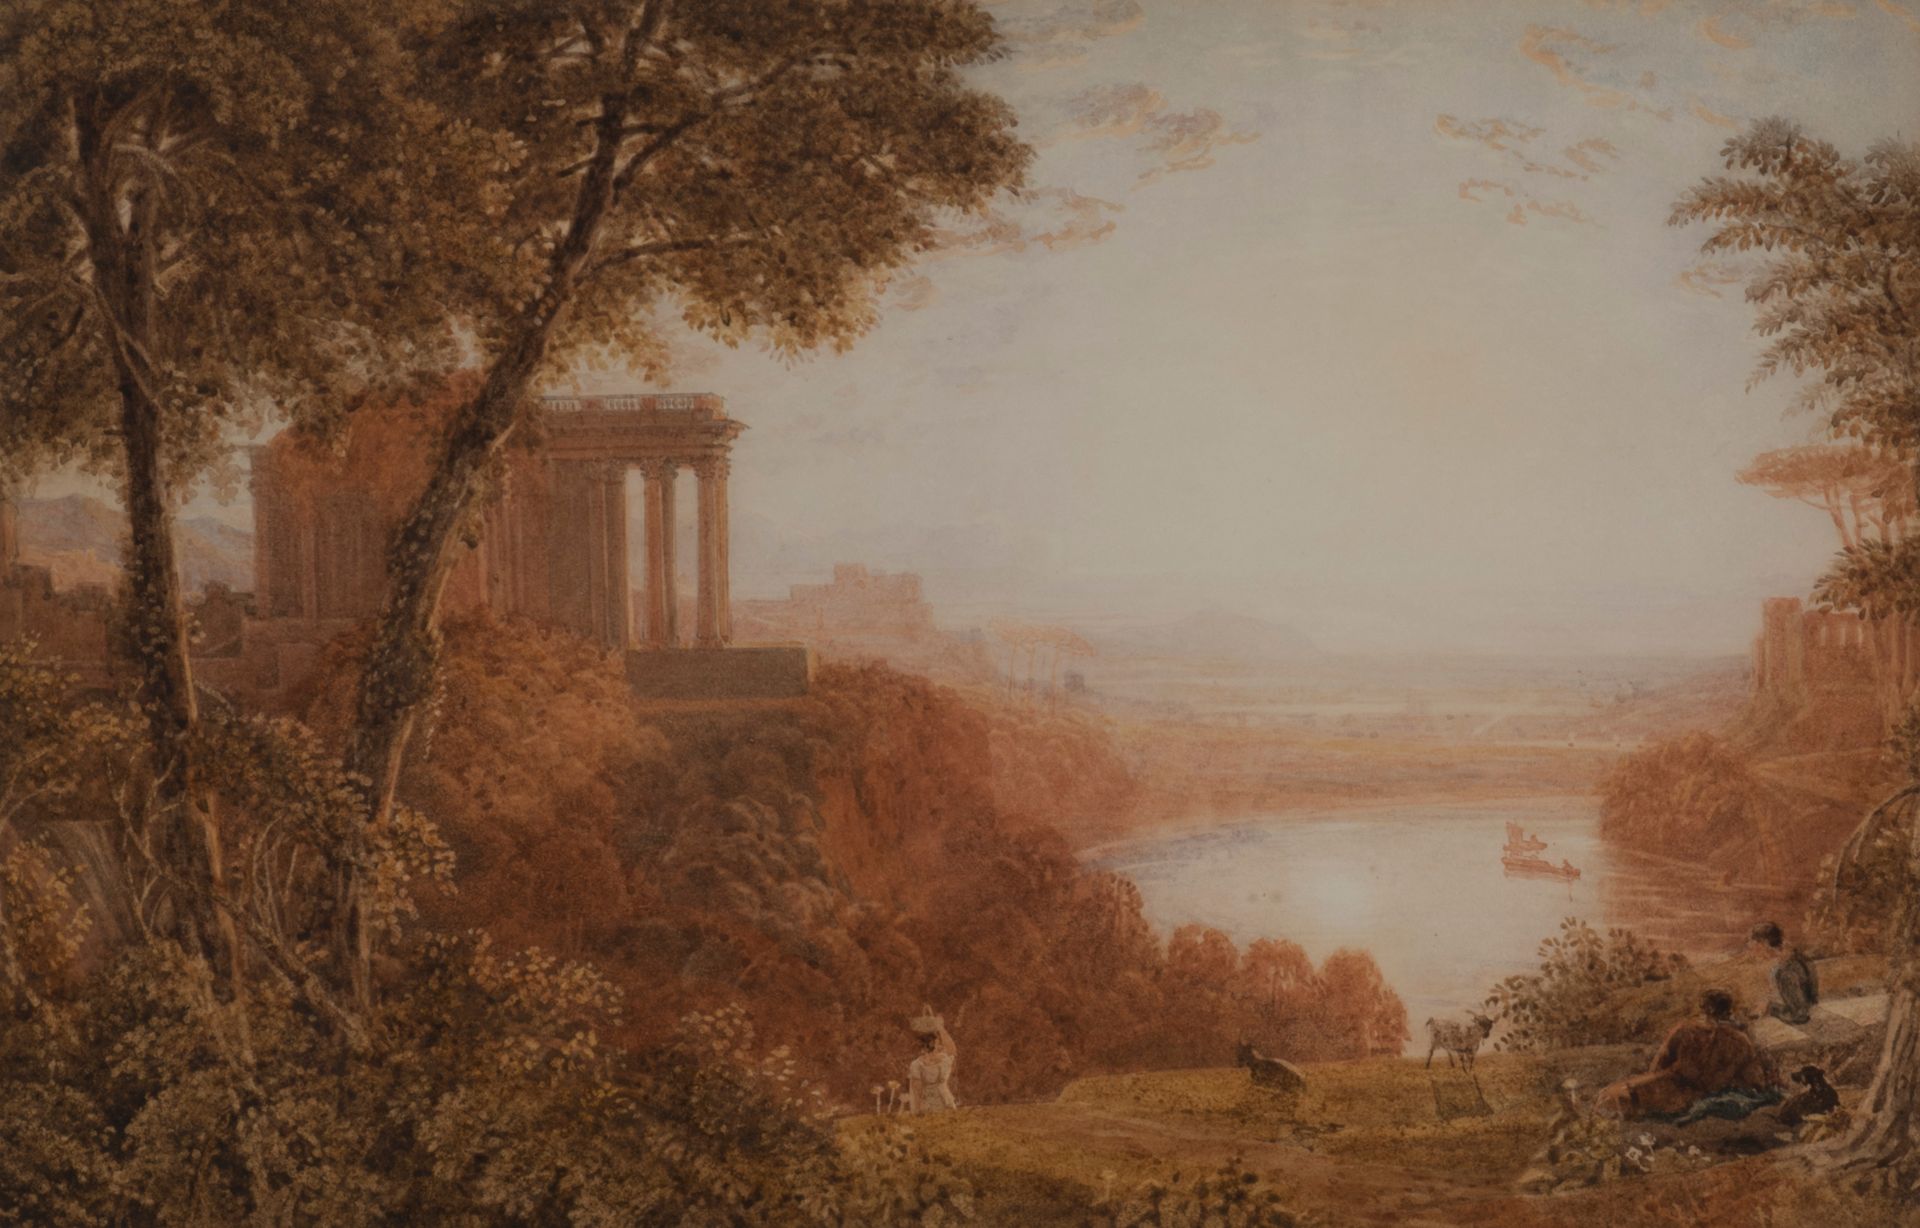 GEORGE II BARRET (C.1767-1842) 
Landscape
Wash on paper, signed at the bottom.
F&hellip;